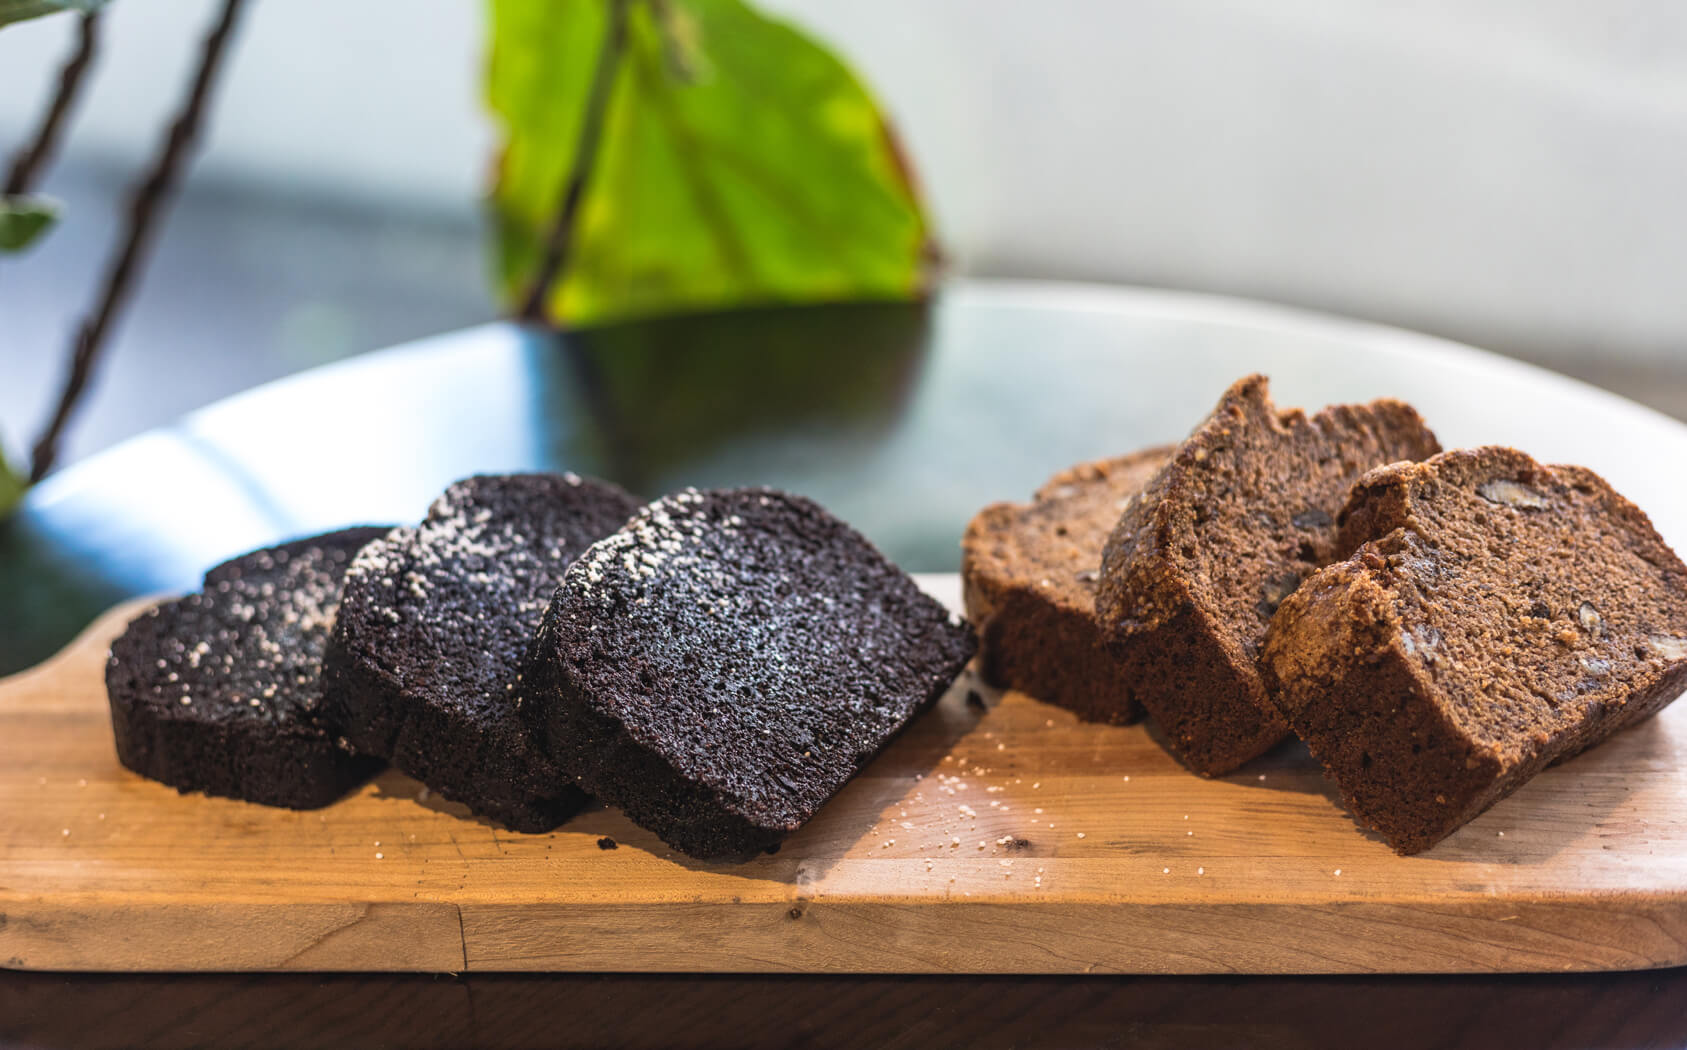 Savor a freshly baked chocolate or pecan cake